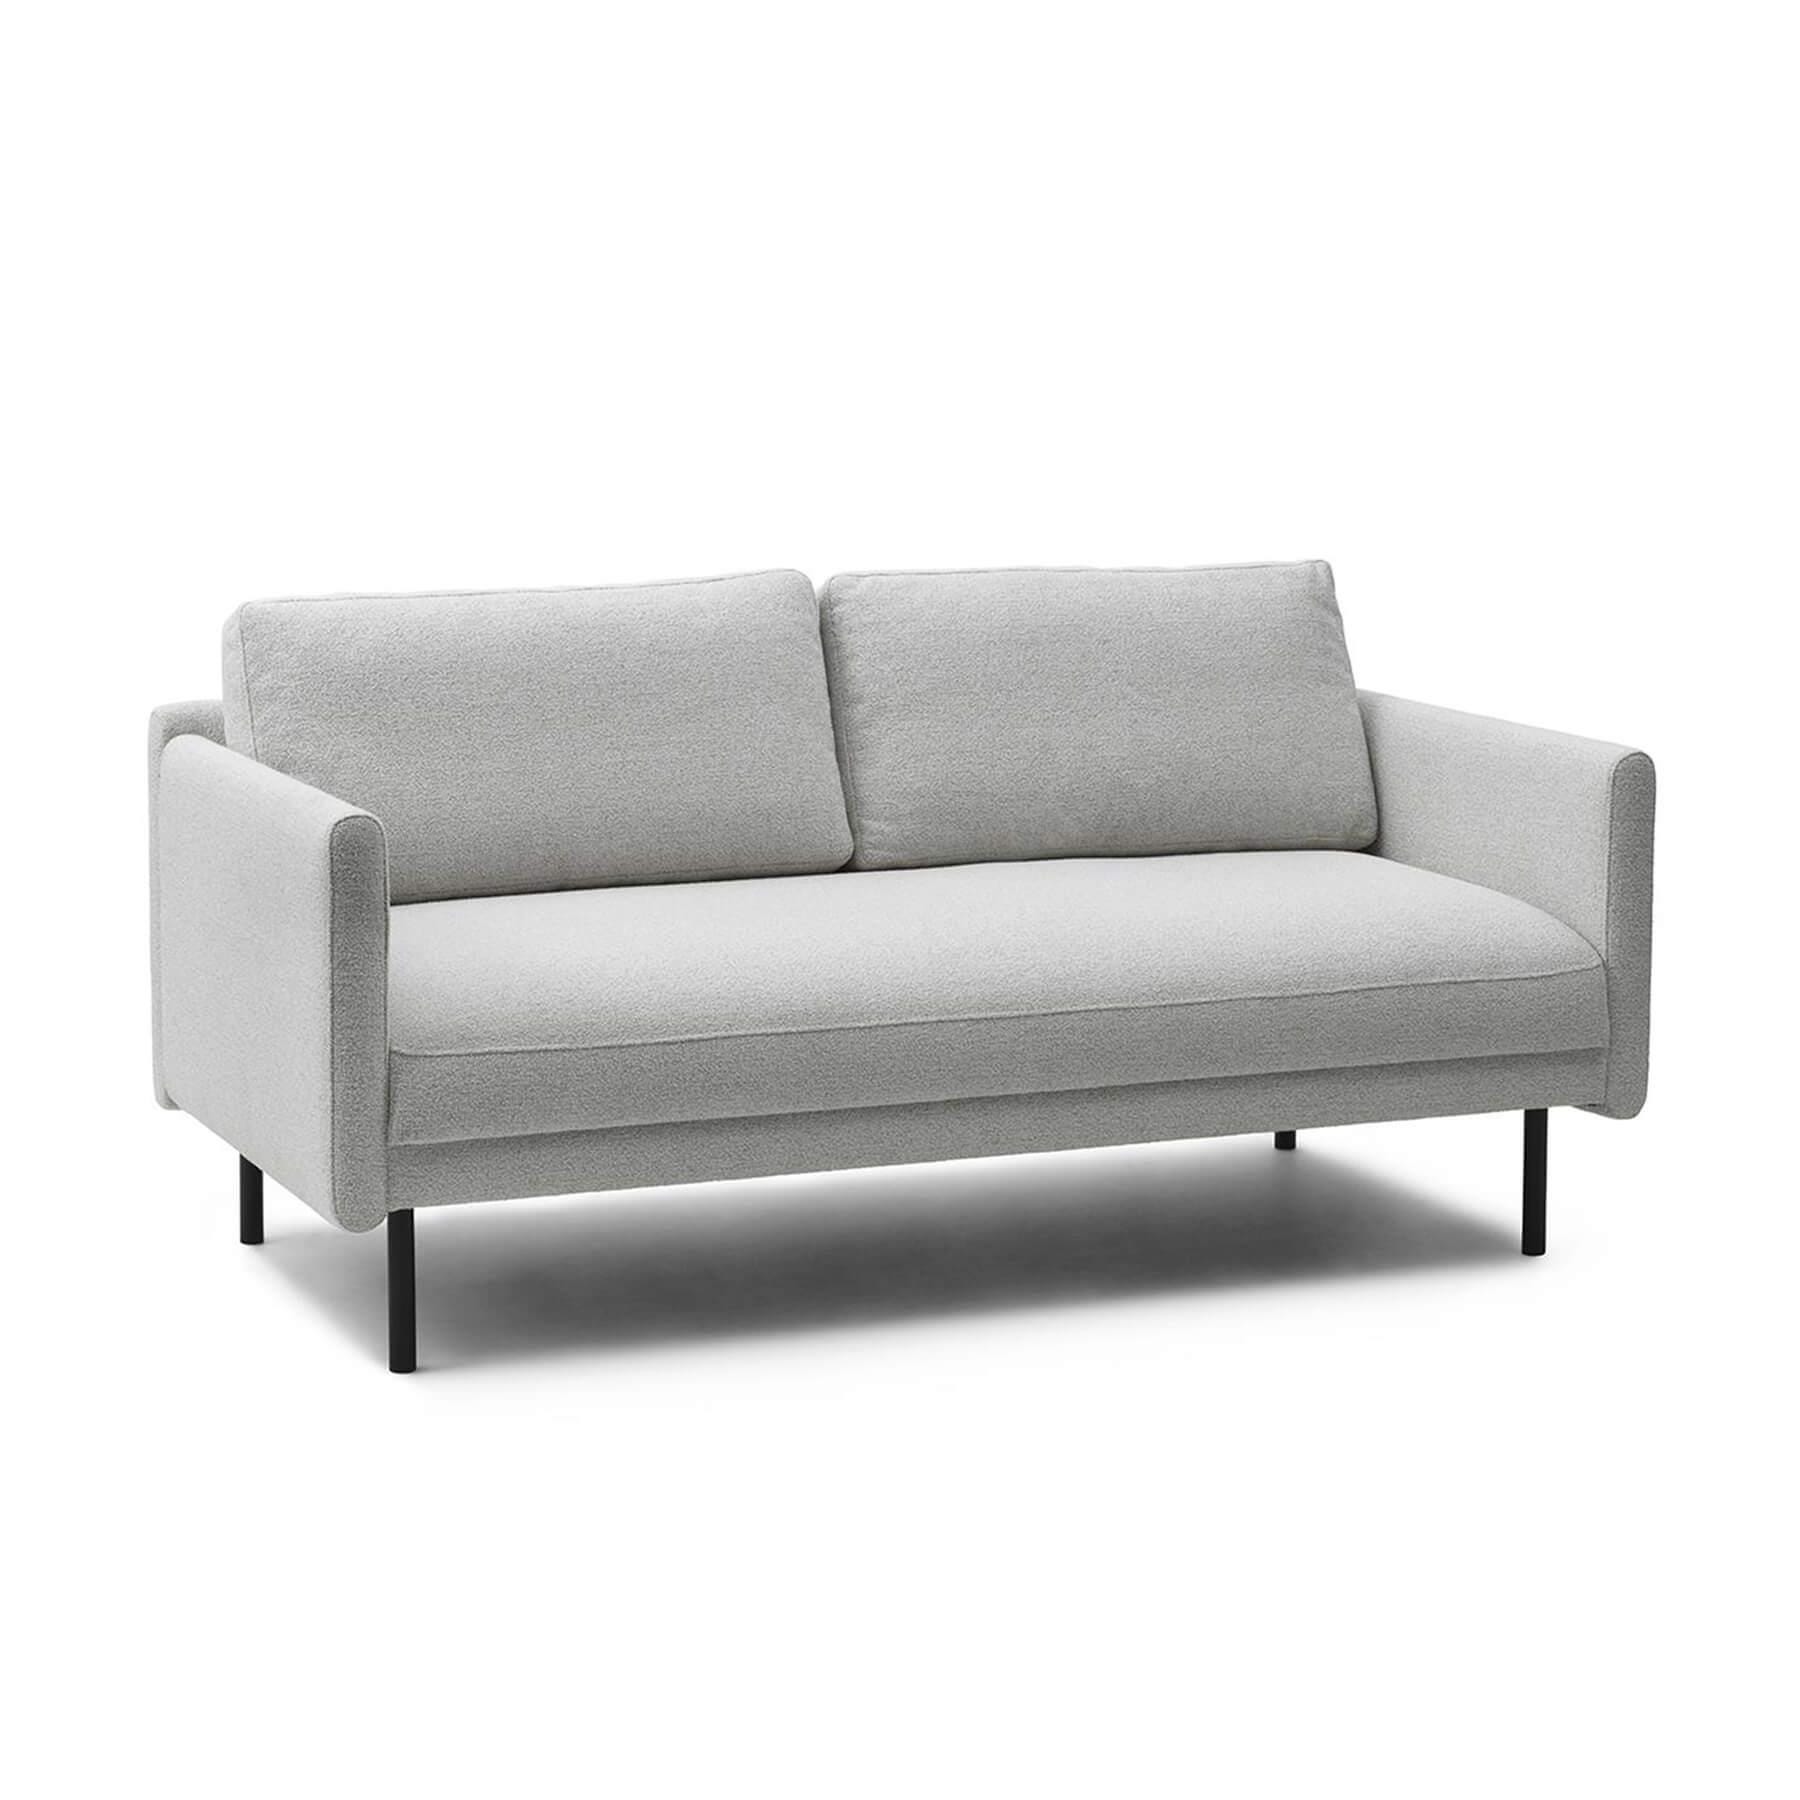 Normann Copenhagen Rar 2 Seater Sofa Venezia Off White Designer Furniture From Holloways Of Ludlow